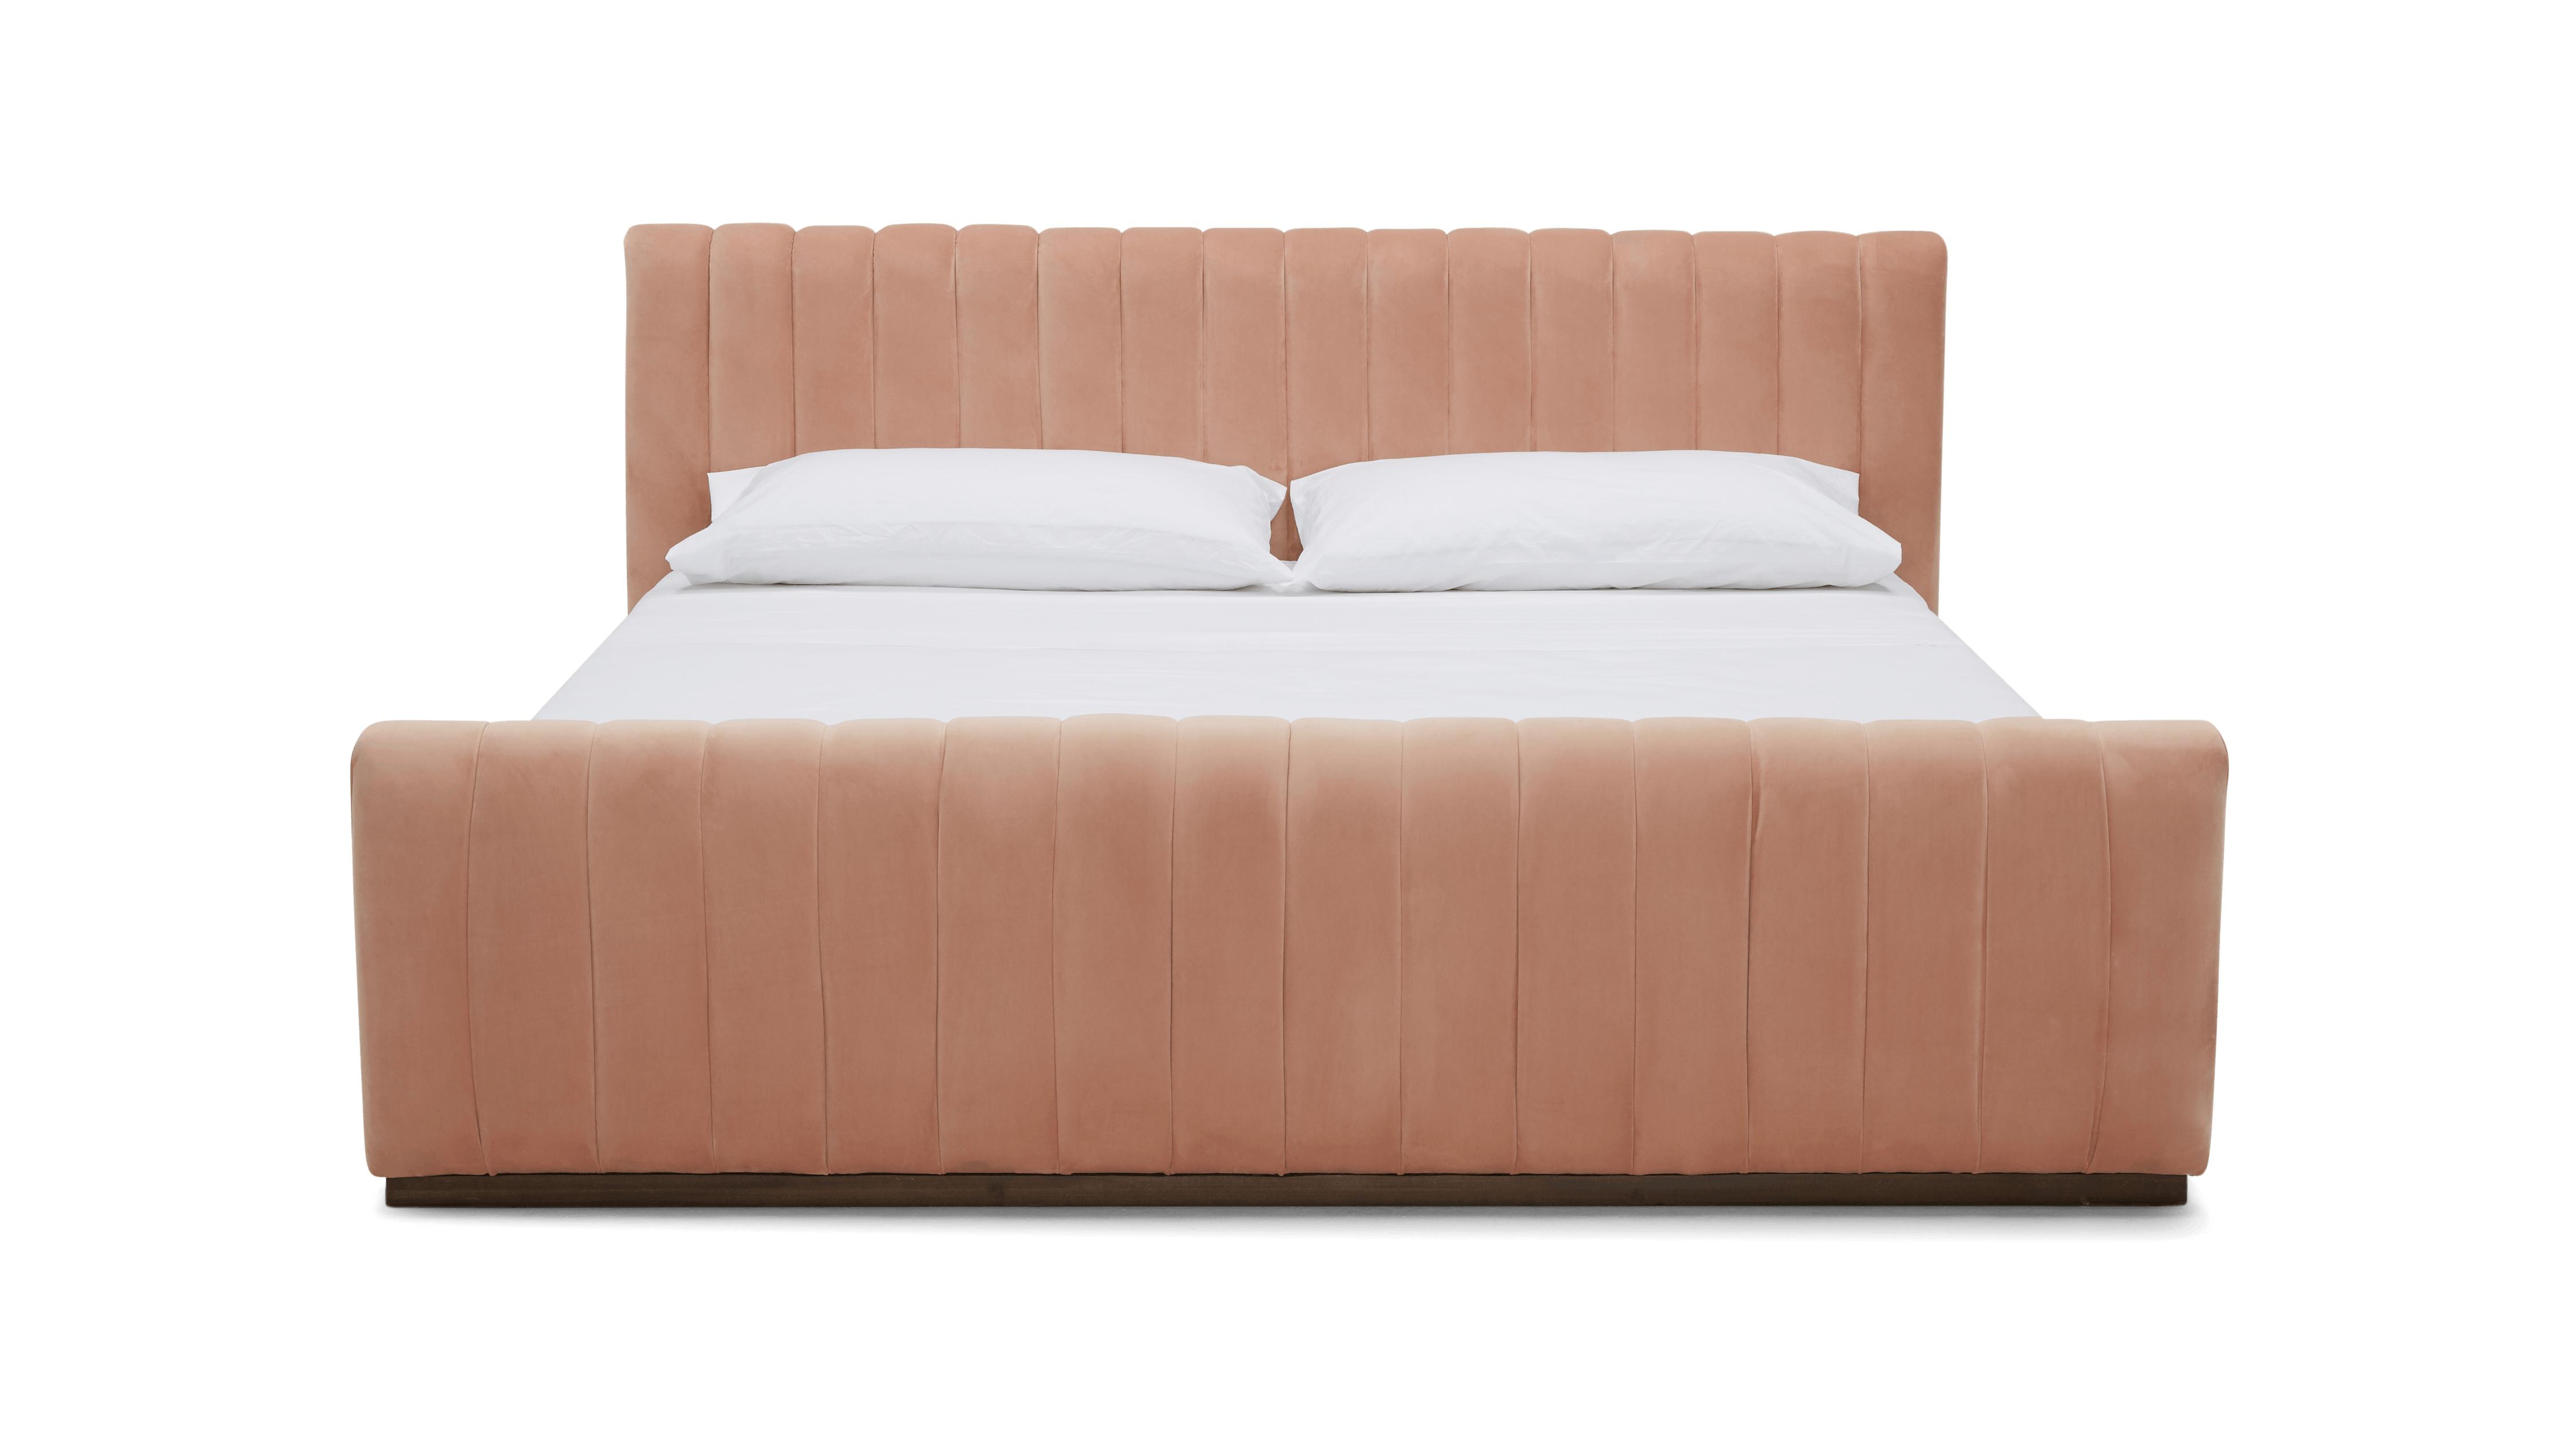 Pink Camille Mid Century Modern Bed - Royale Blush - Mocha - Queen - Joybird